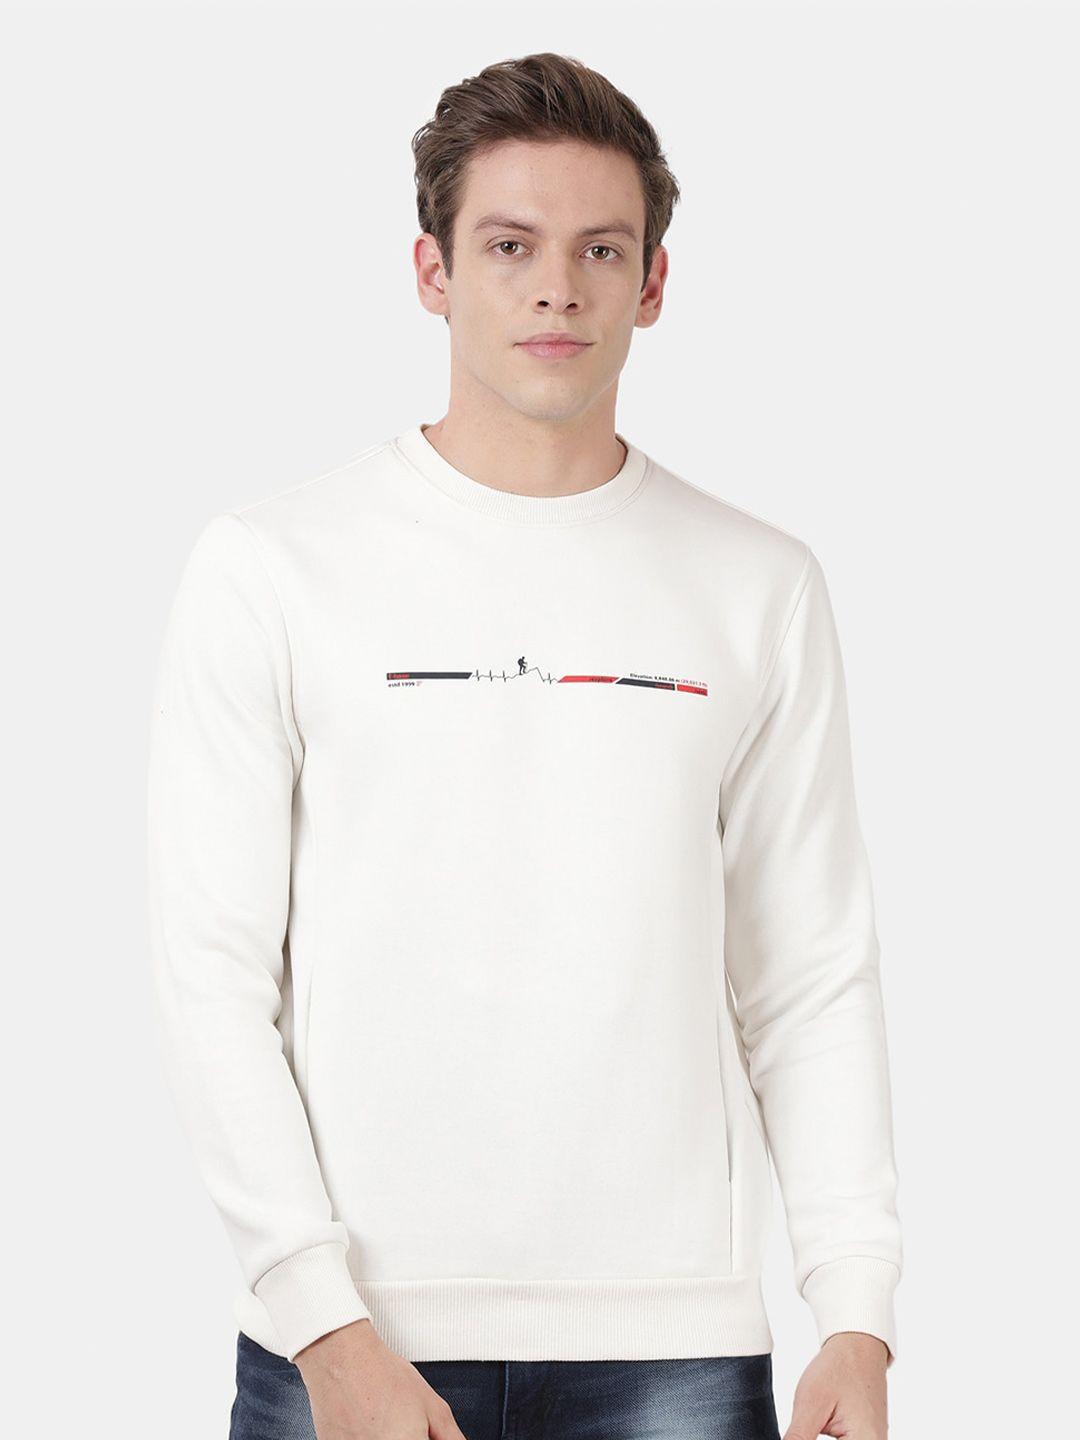 t-base graphic printed cotton sweatshirt